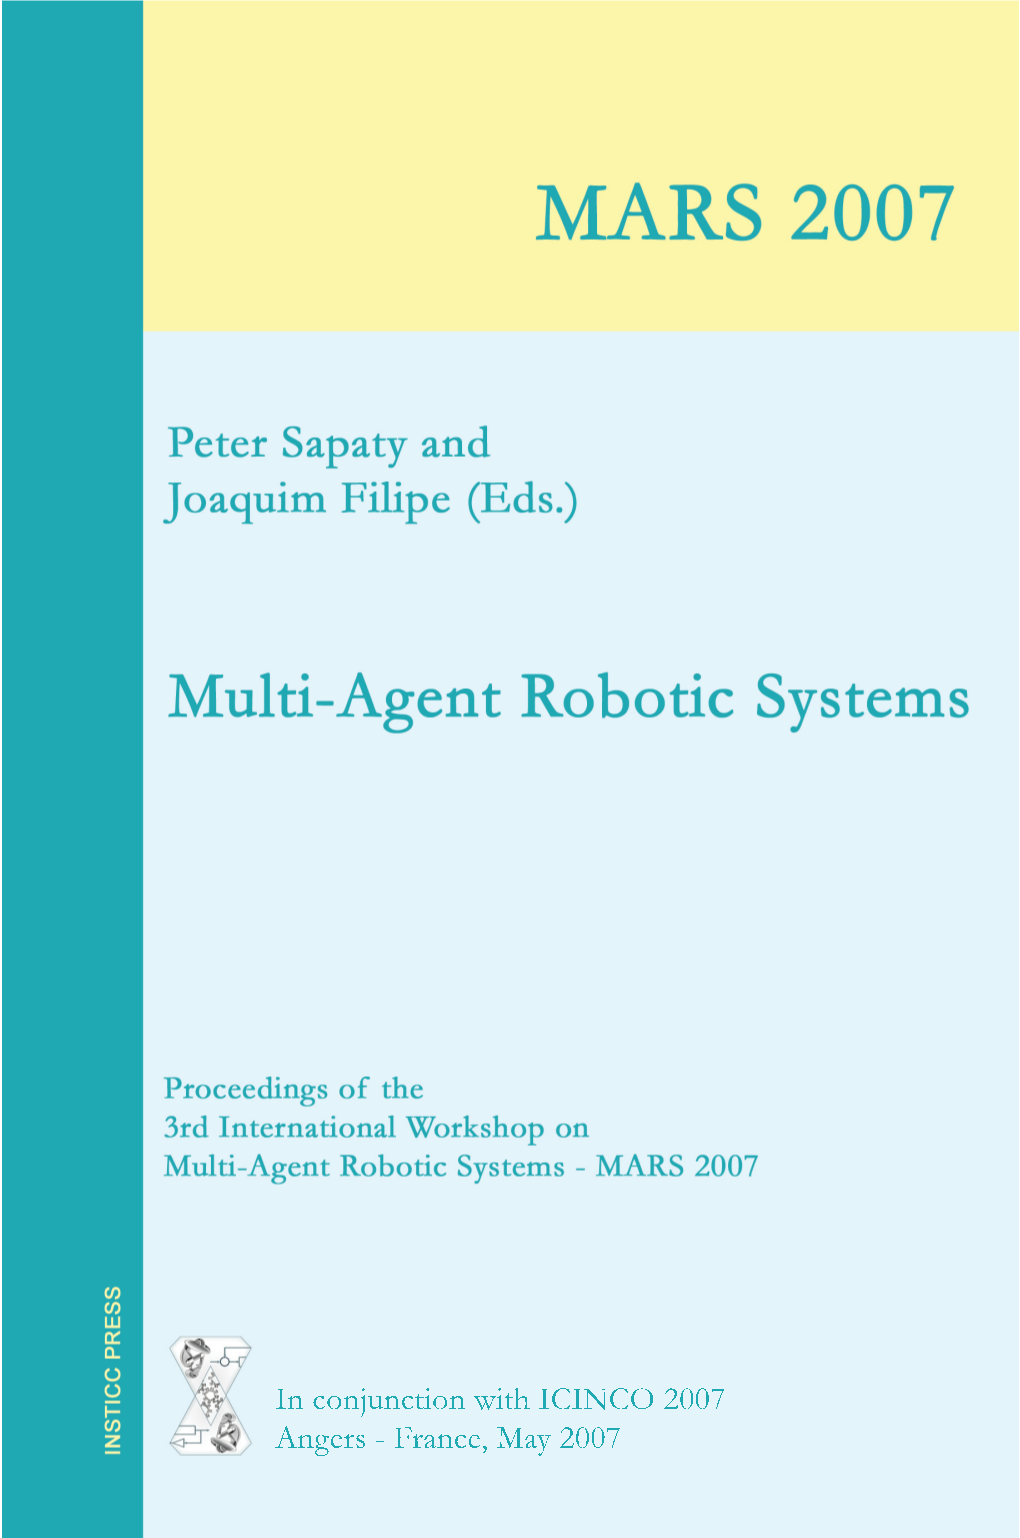 Workshop on Multi-Agent Robotic Systems MARS 2007